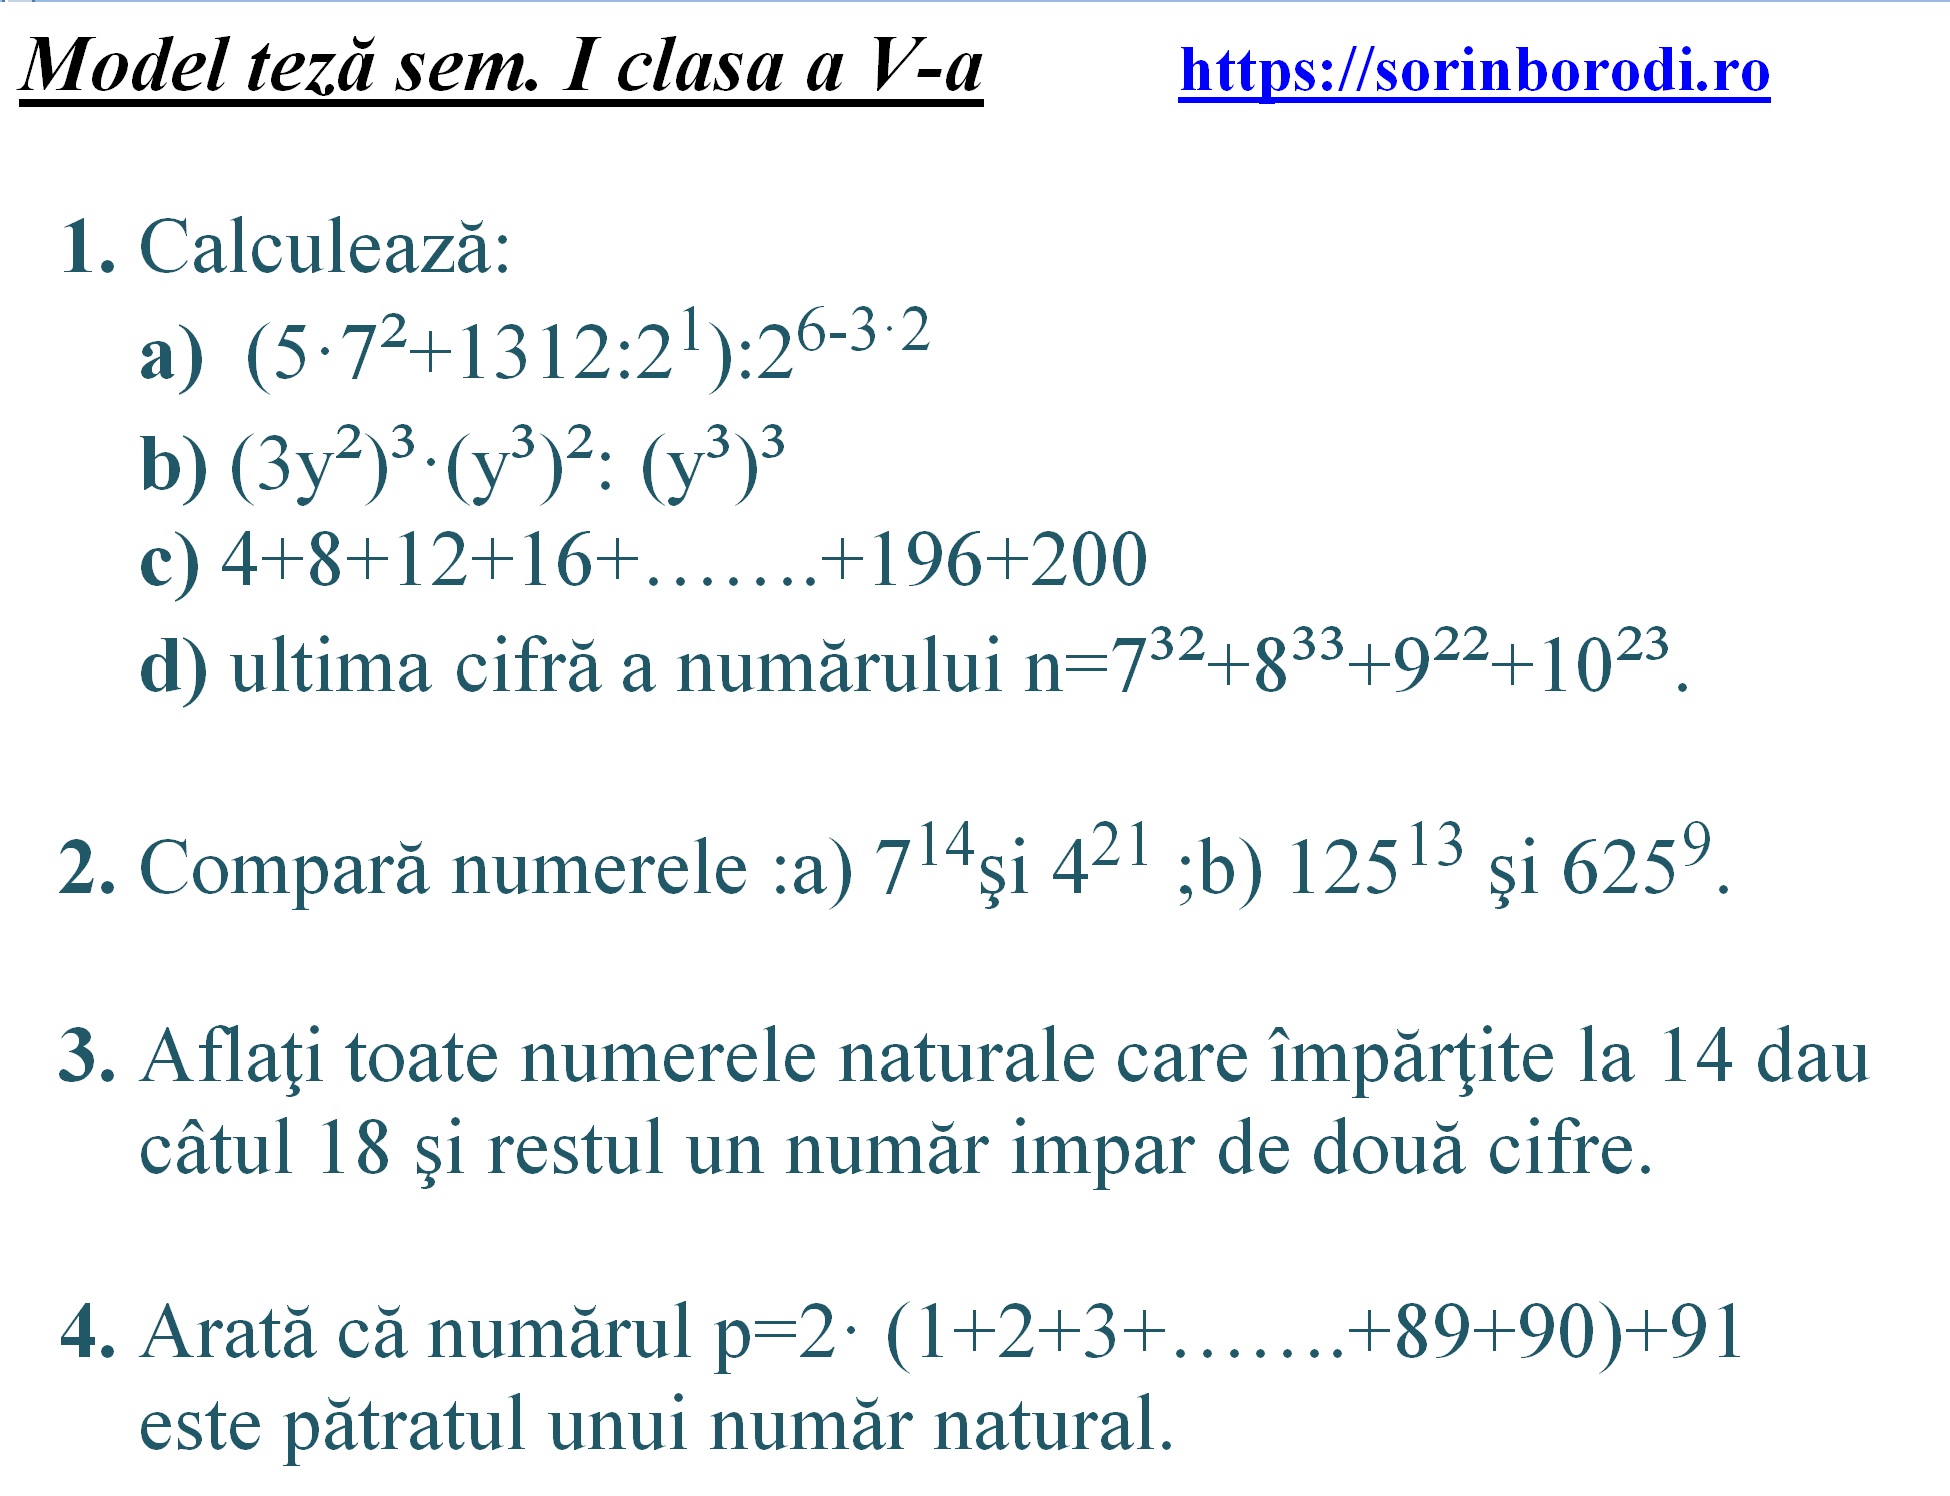 Teza Matematica Clasa 5 Sem 2 Pdf Modele teza matematica clasa a V-a semestrul I | De-a valma...